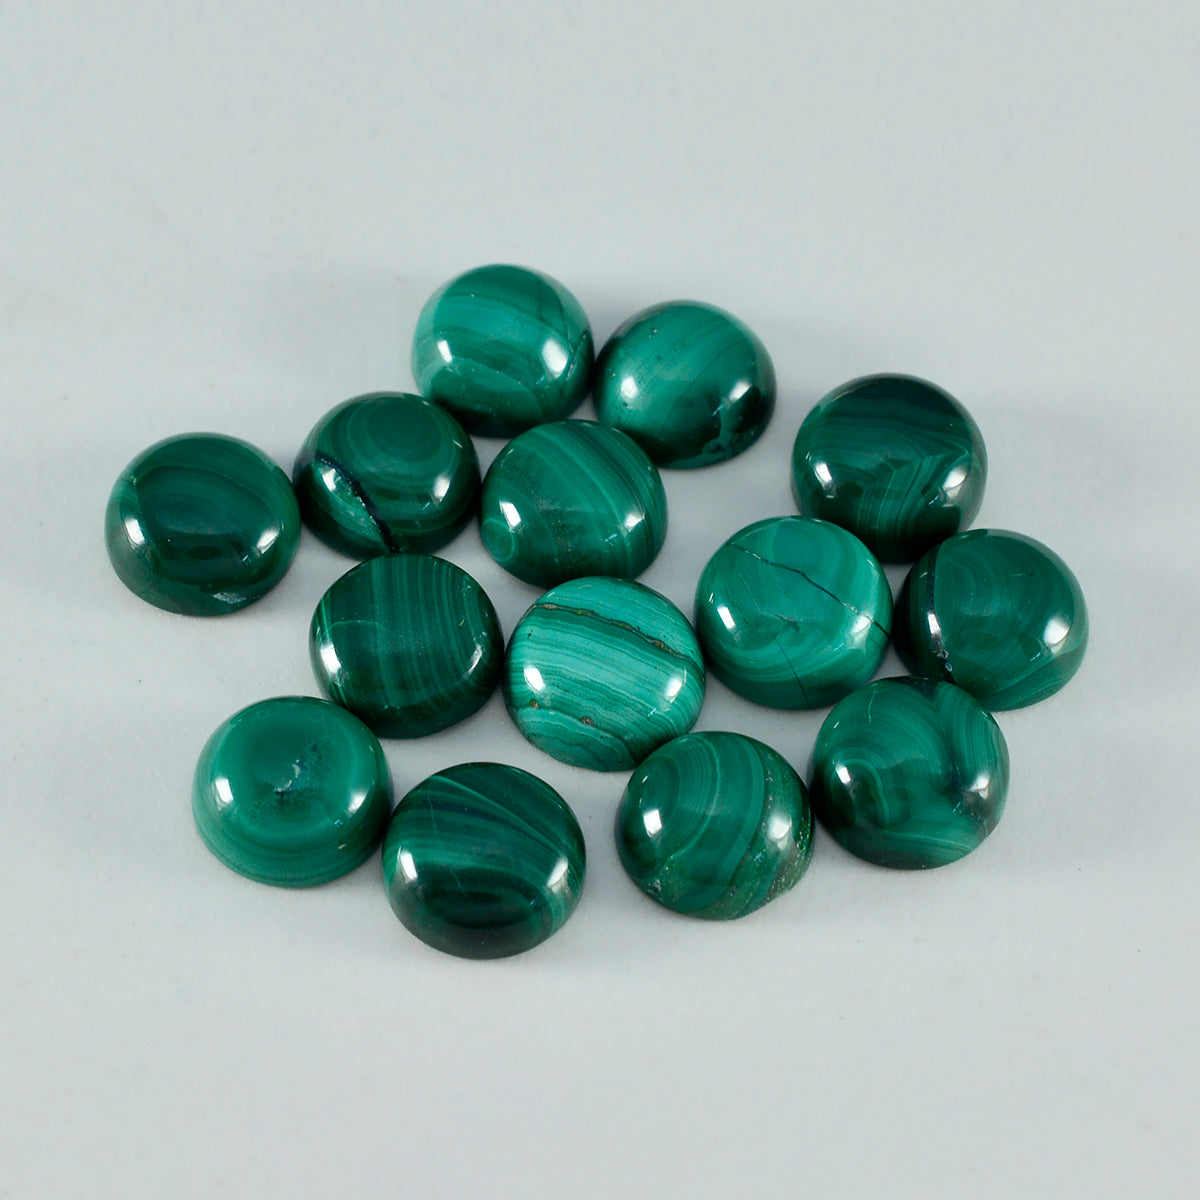 riyogems 1 st grön malakit cabochon 8x8 mm rund form häpnadsväckande kvalitet lös sten